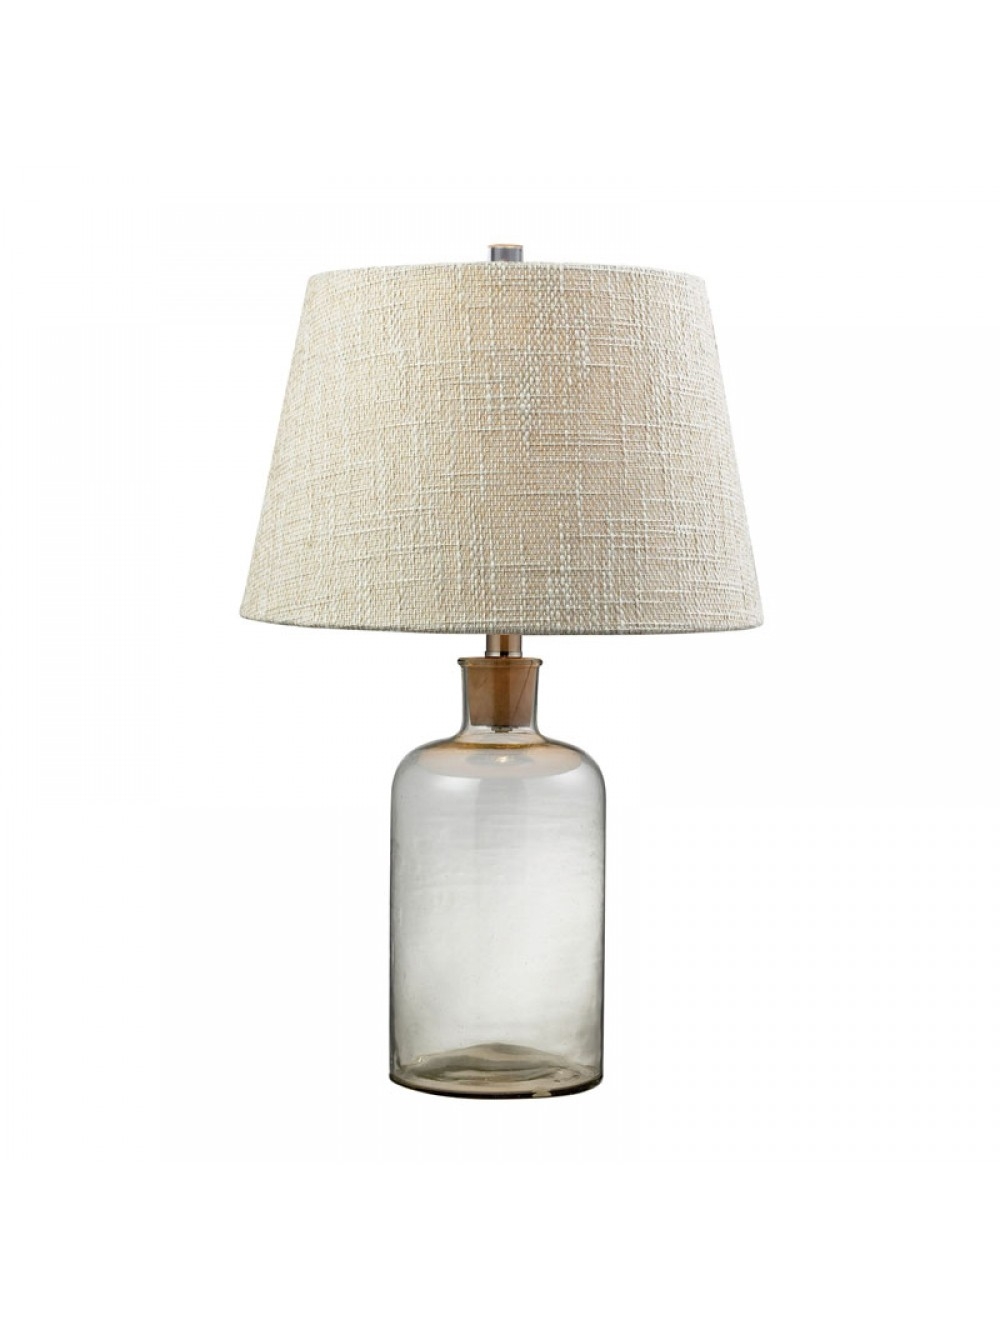 Raritan Table Lamp  - 14.5"L x 14.5"W x 26" H - Natural/Clear - Image 0